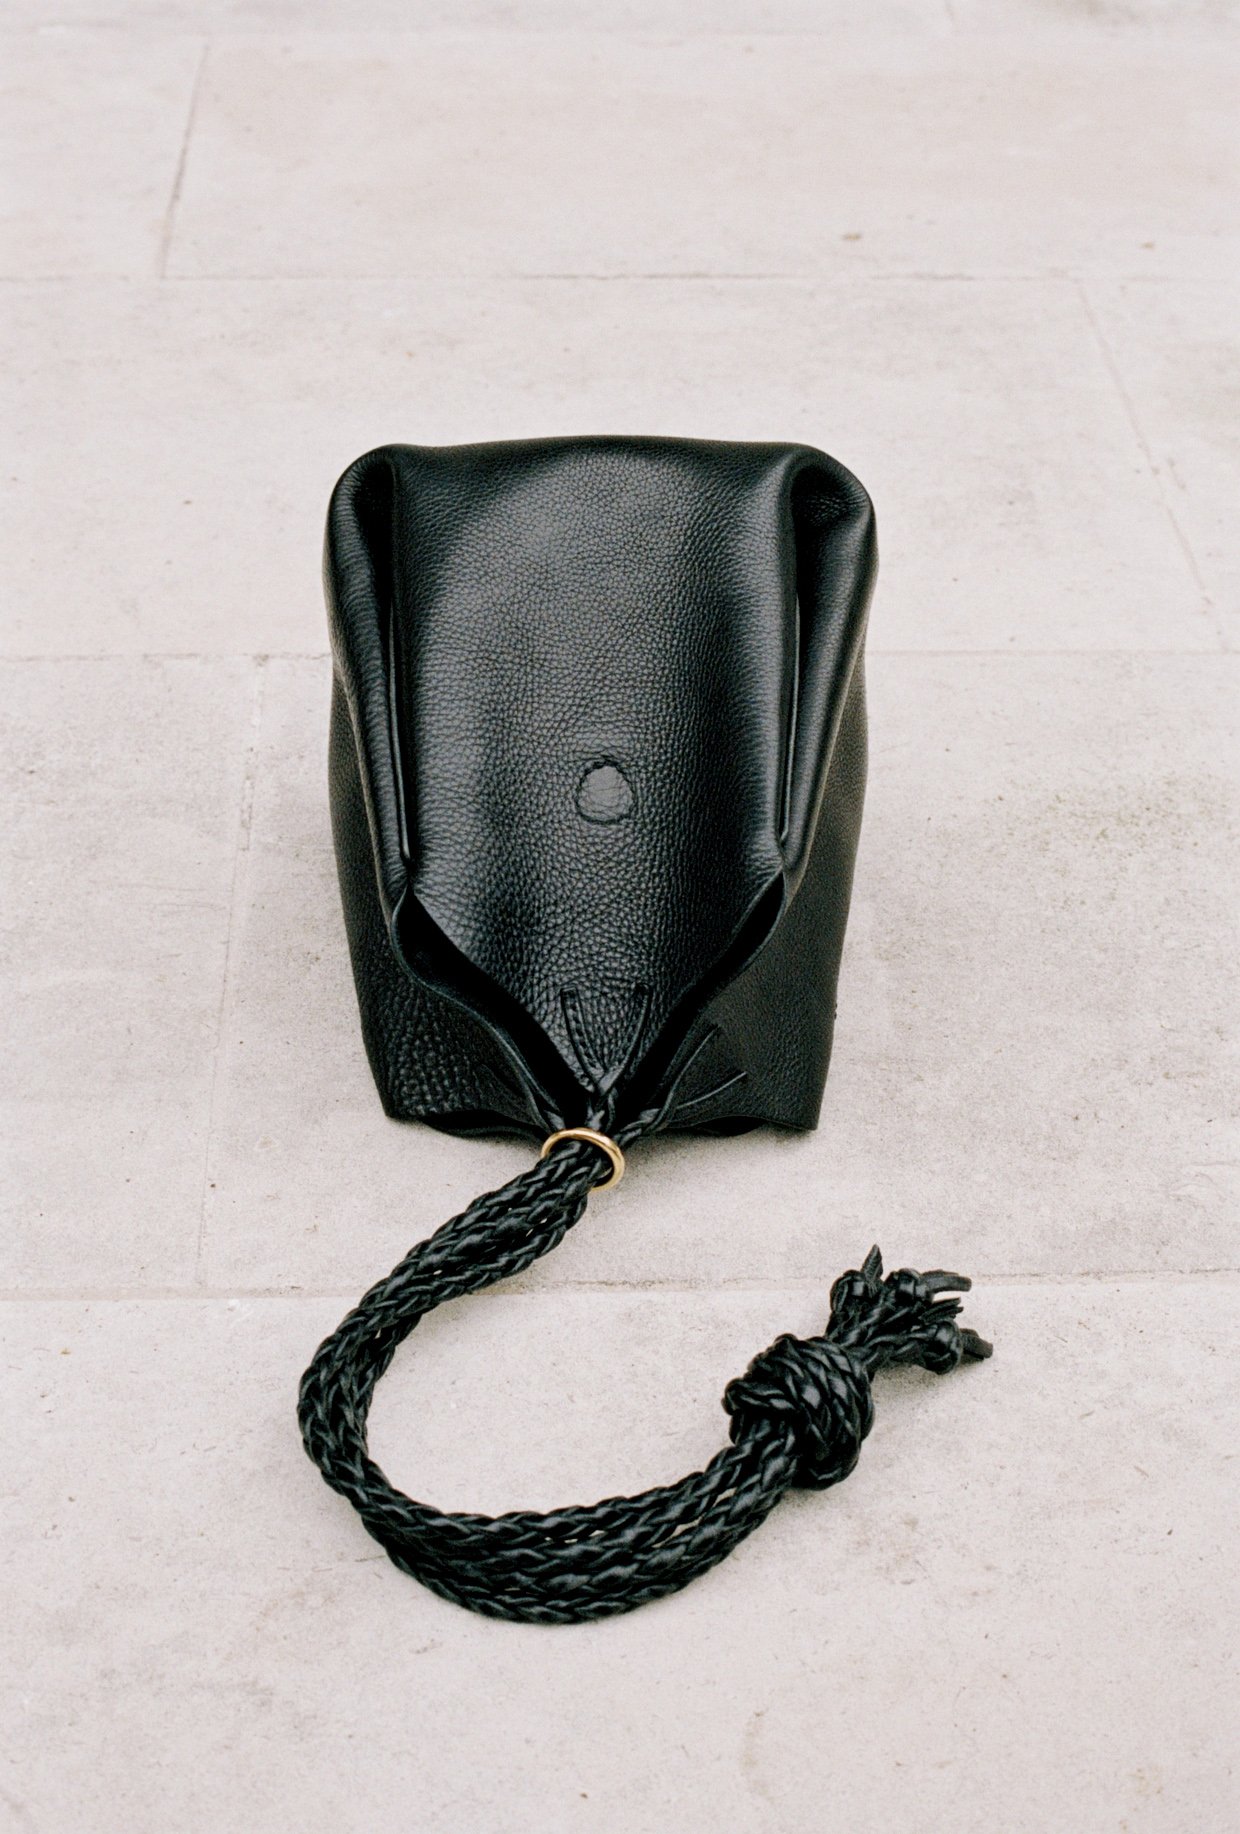 baluchon bag by designer Mark Tallowin